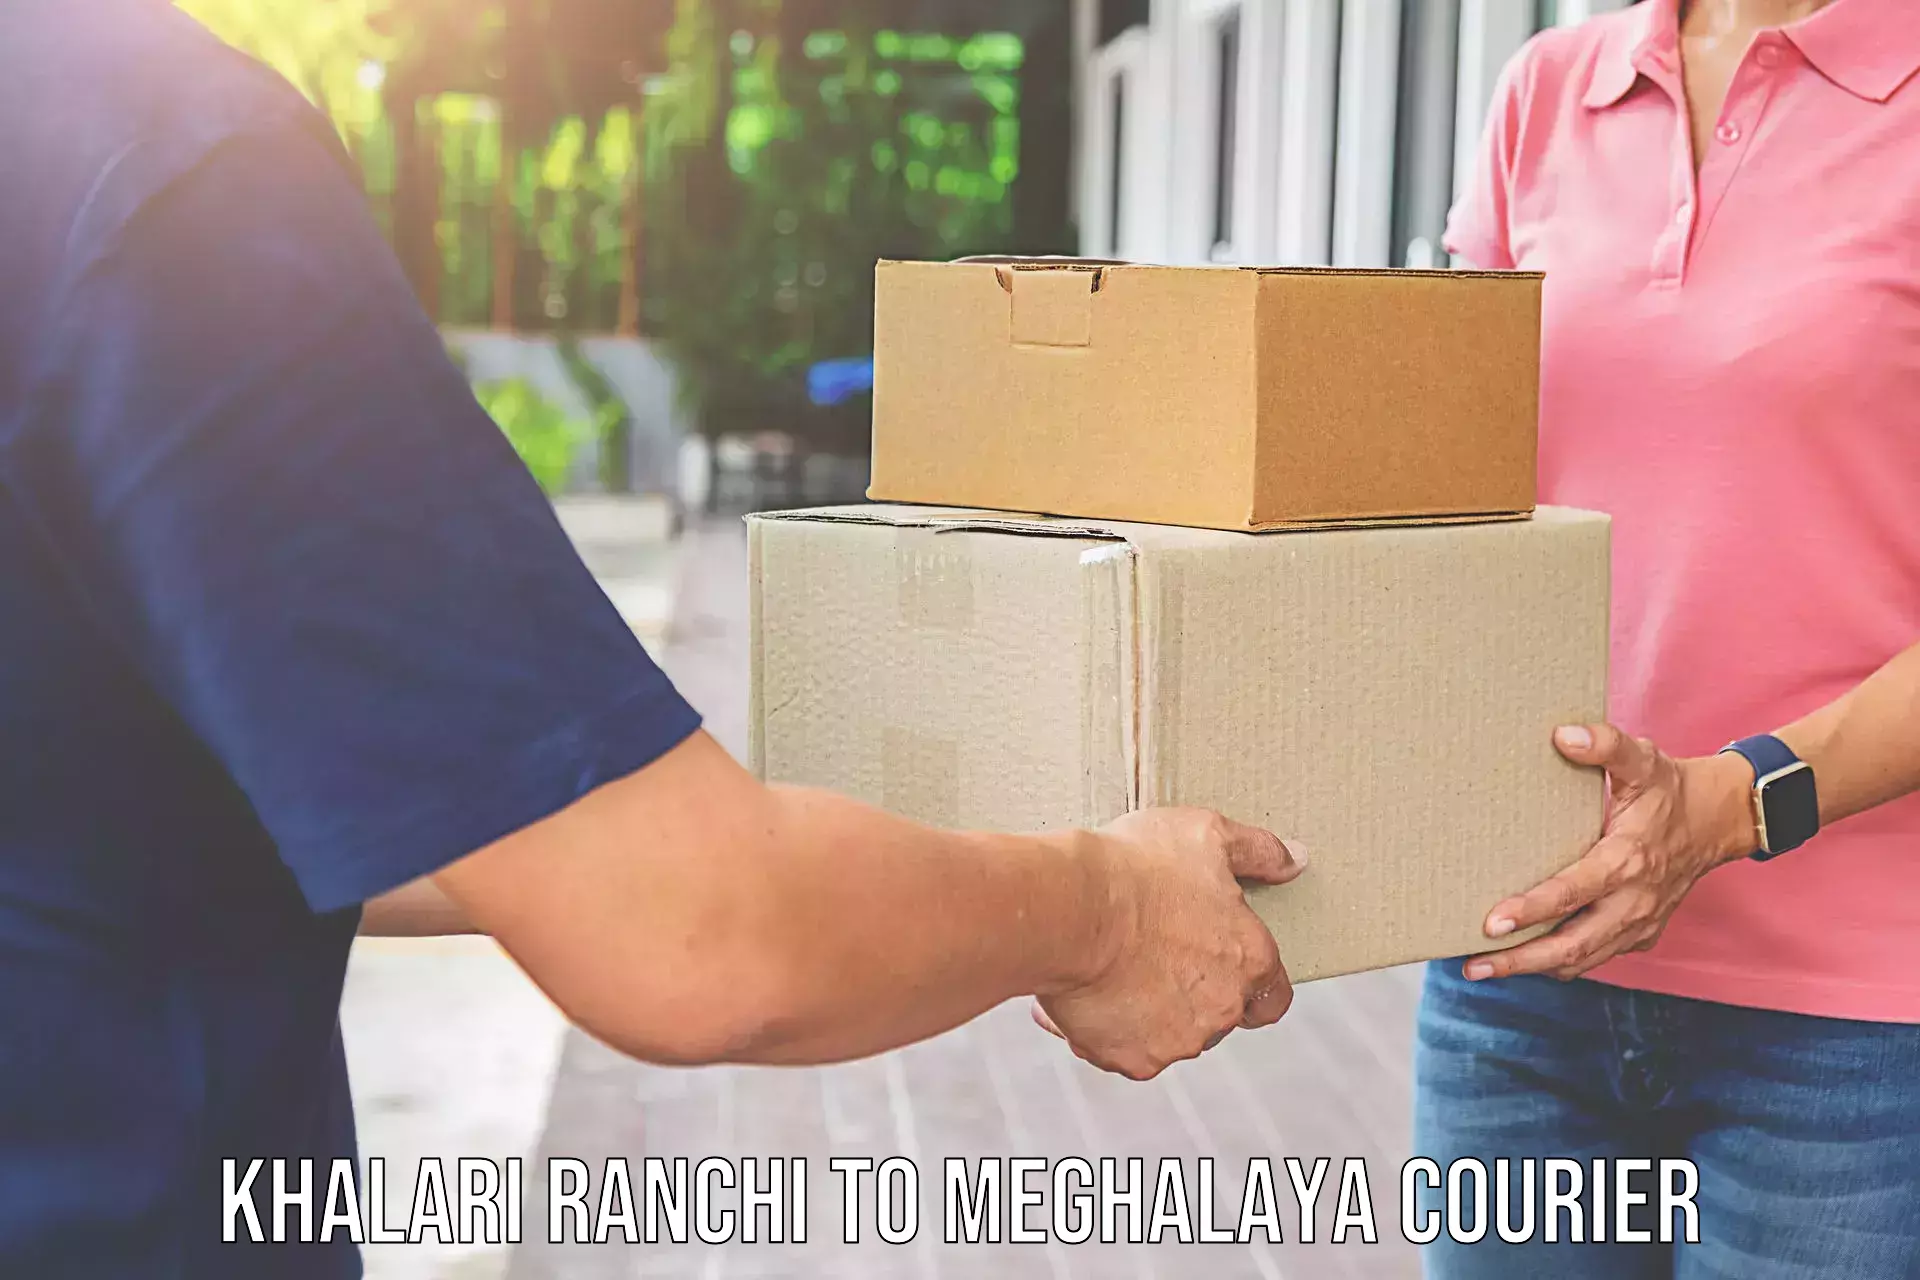 Professional moving company Khalari Ranchi to Meghalaya